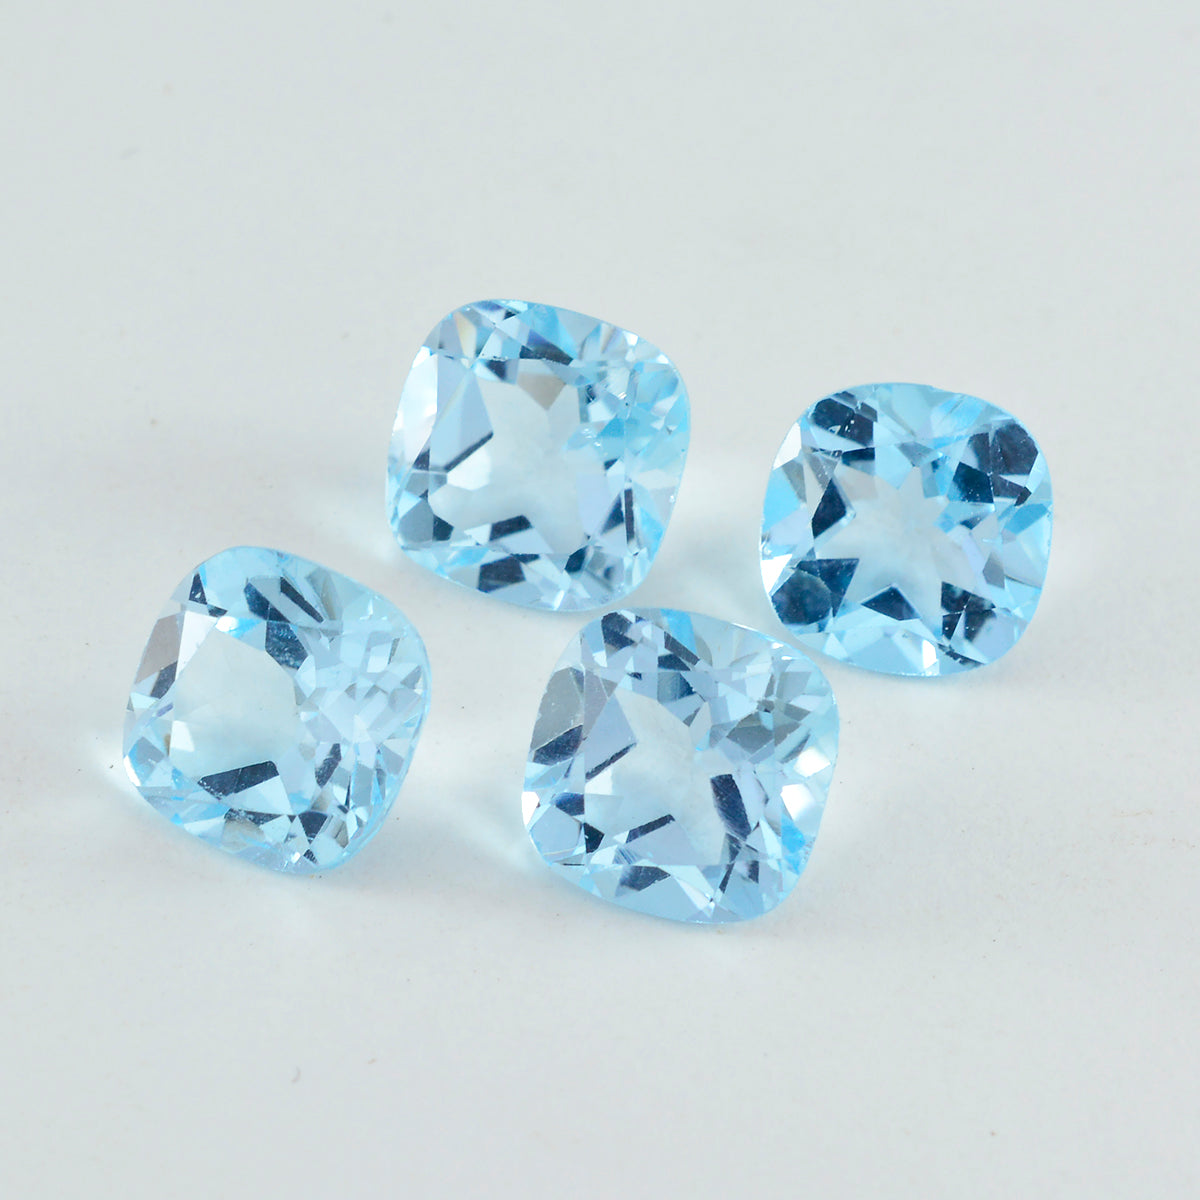 Riyogems 1PC Real Blue Topaz Faceted 11x11 mm Cushion Shape AAA Quality Gemstone